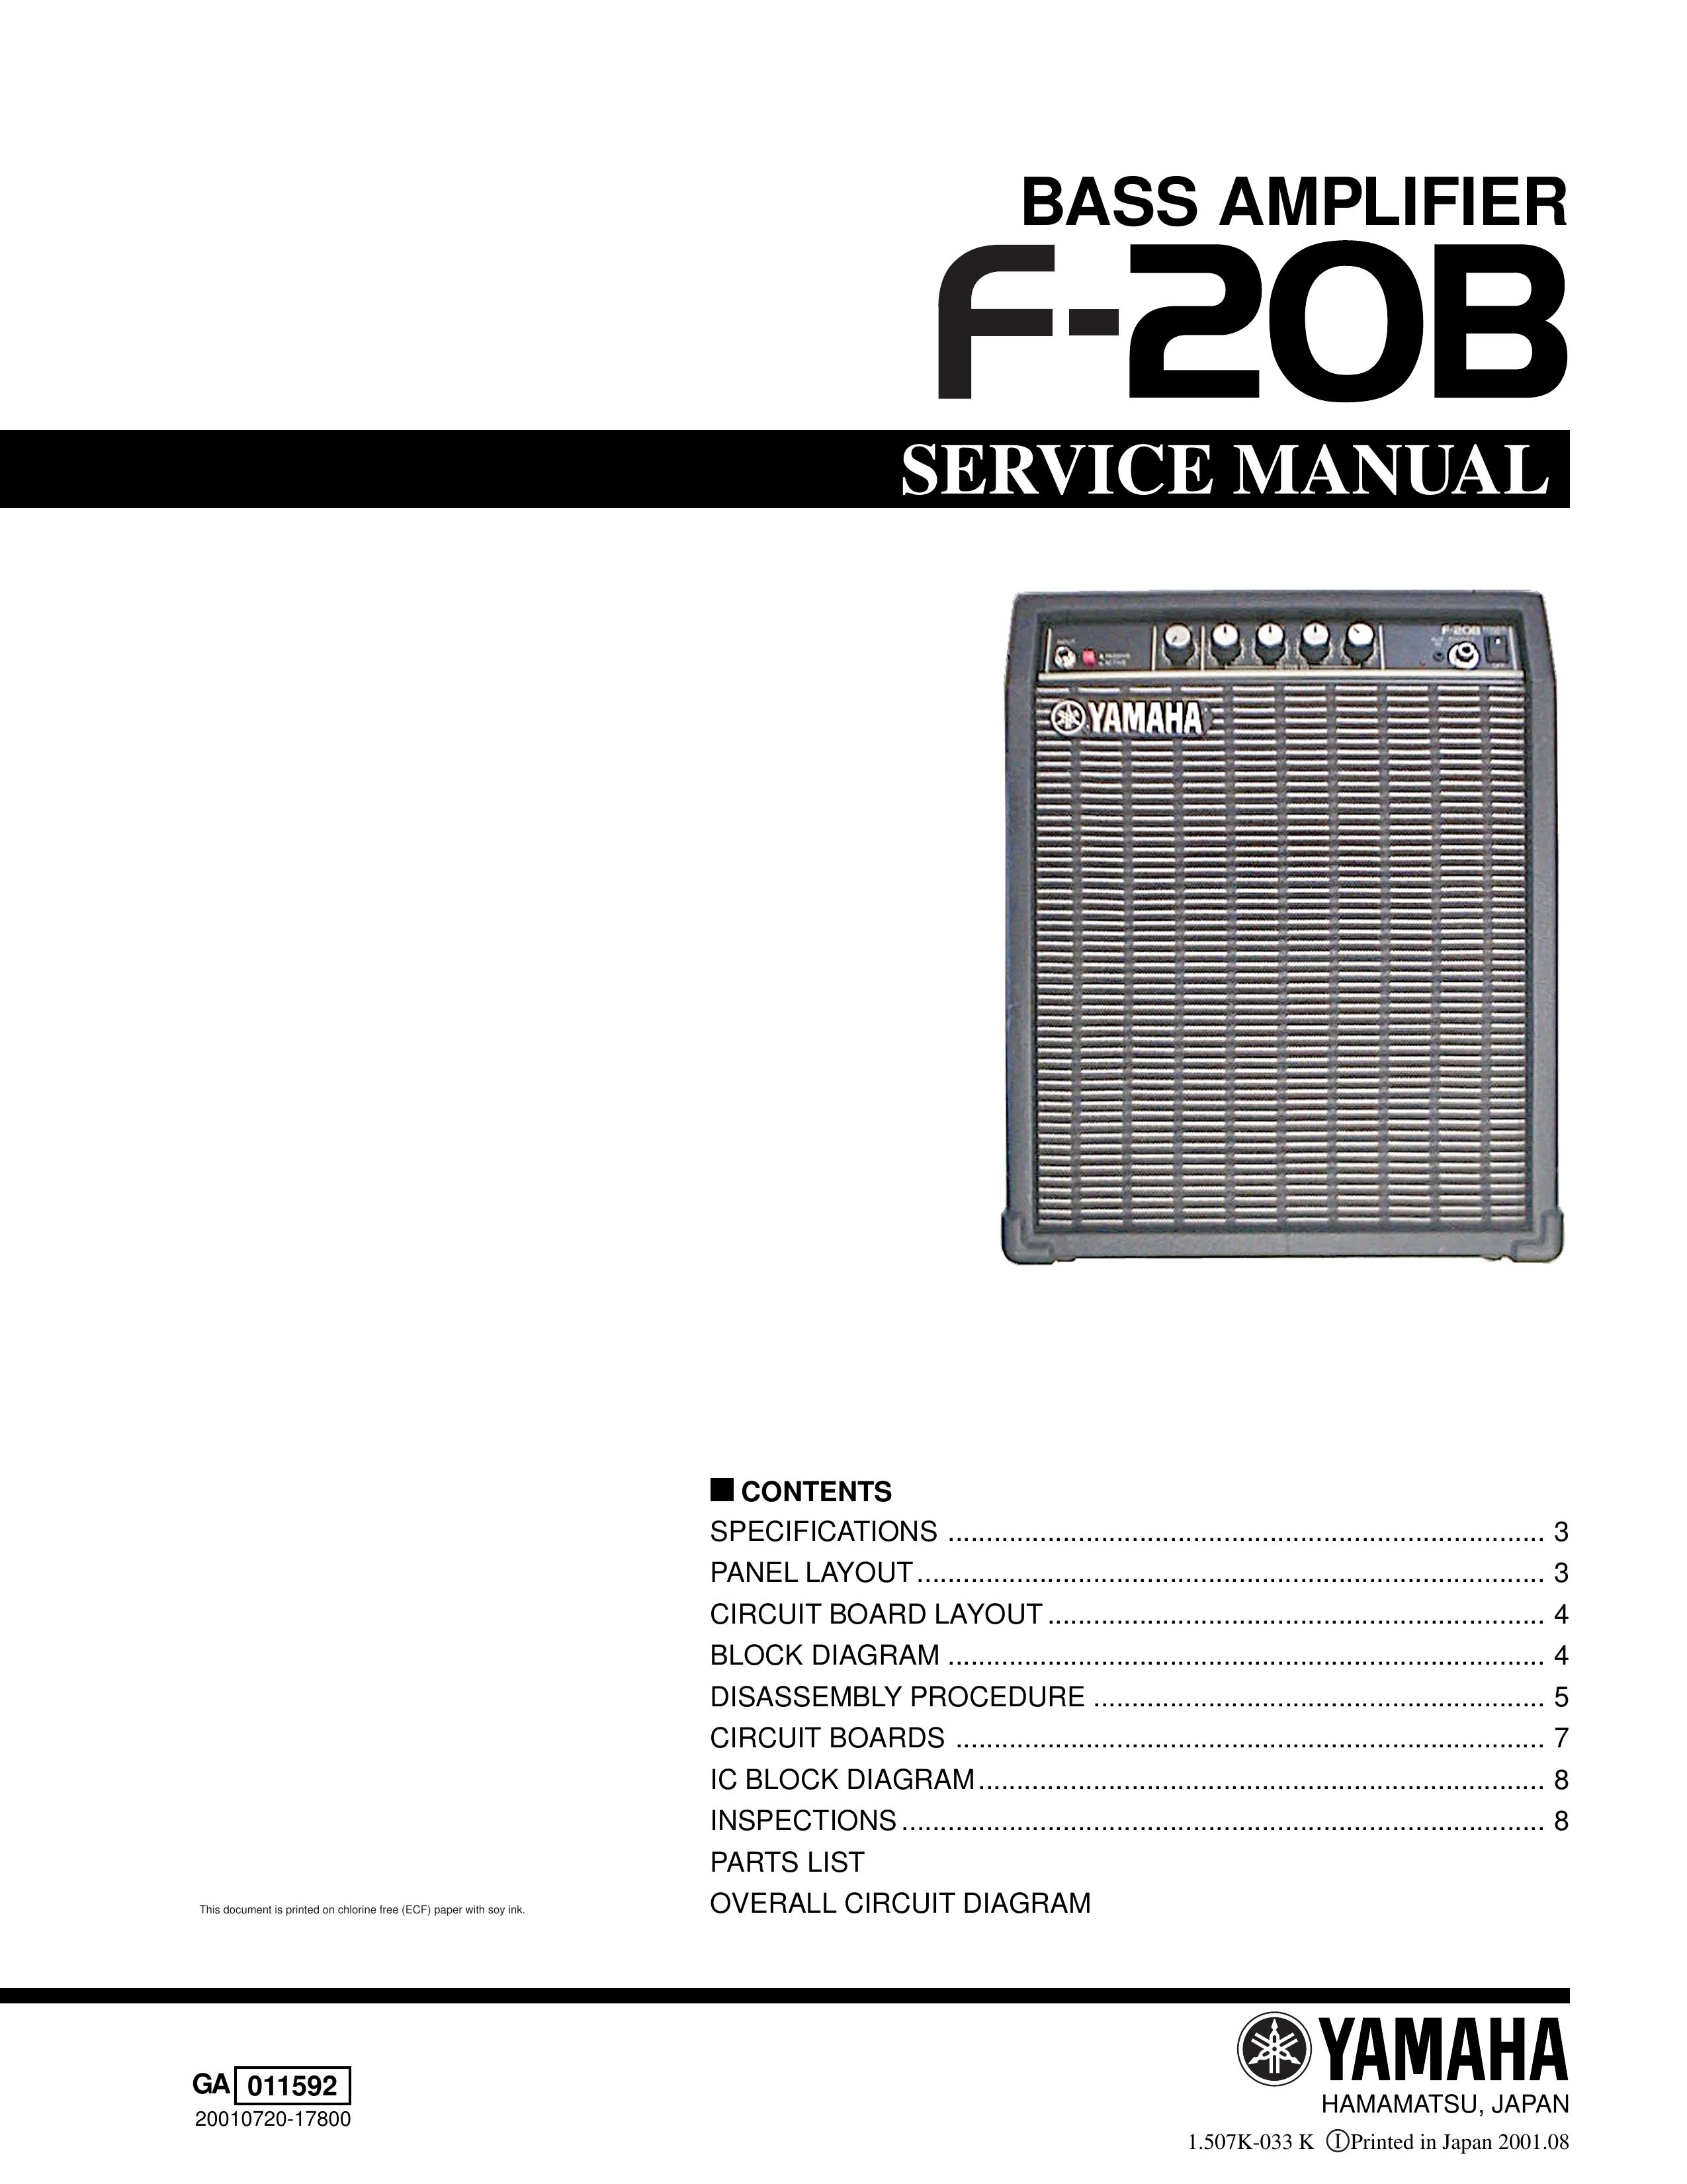 Yamaha f-20B Musical Instrument Amplifier User Manual